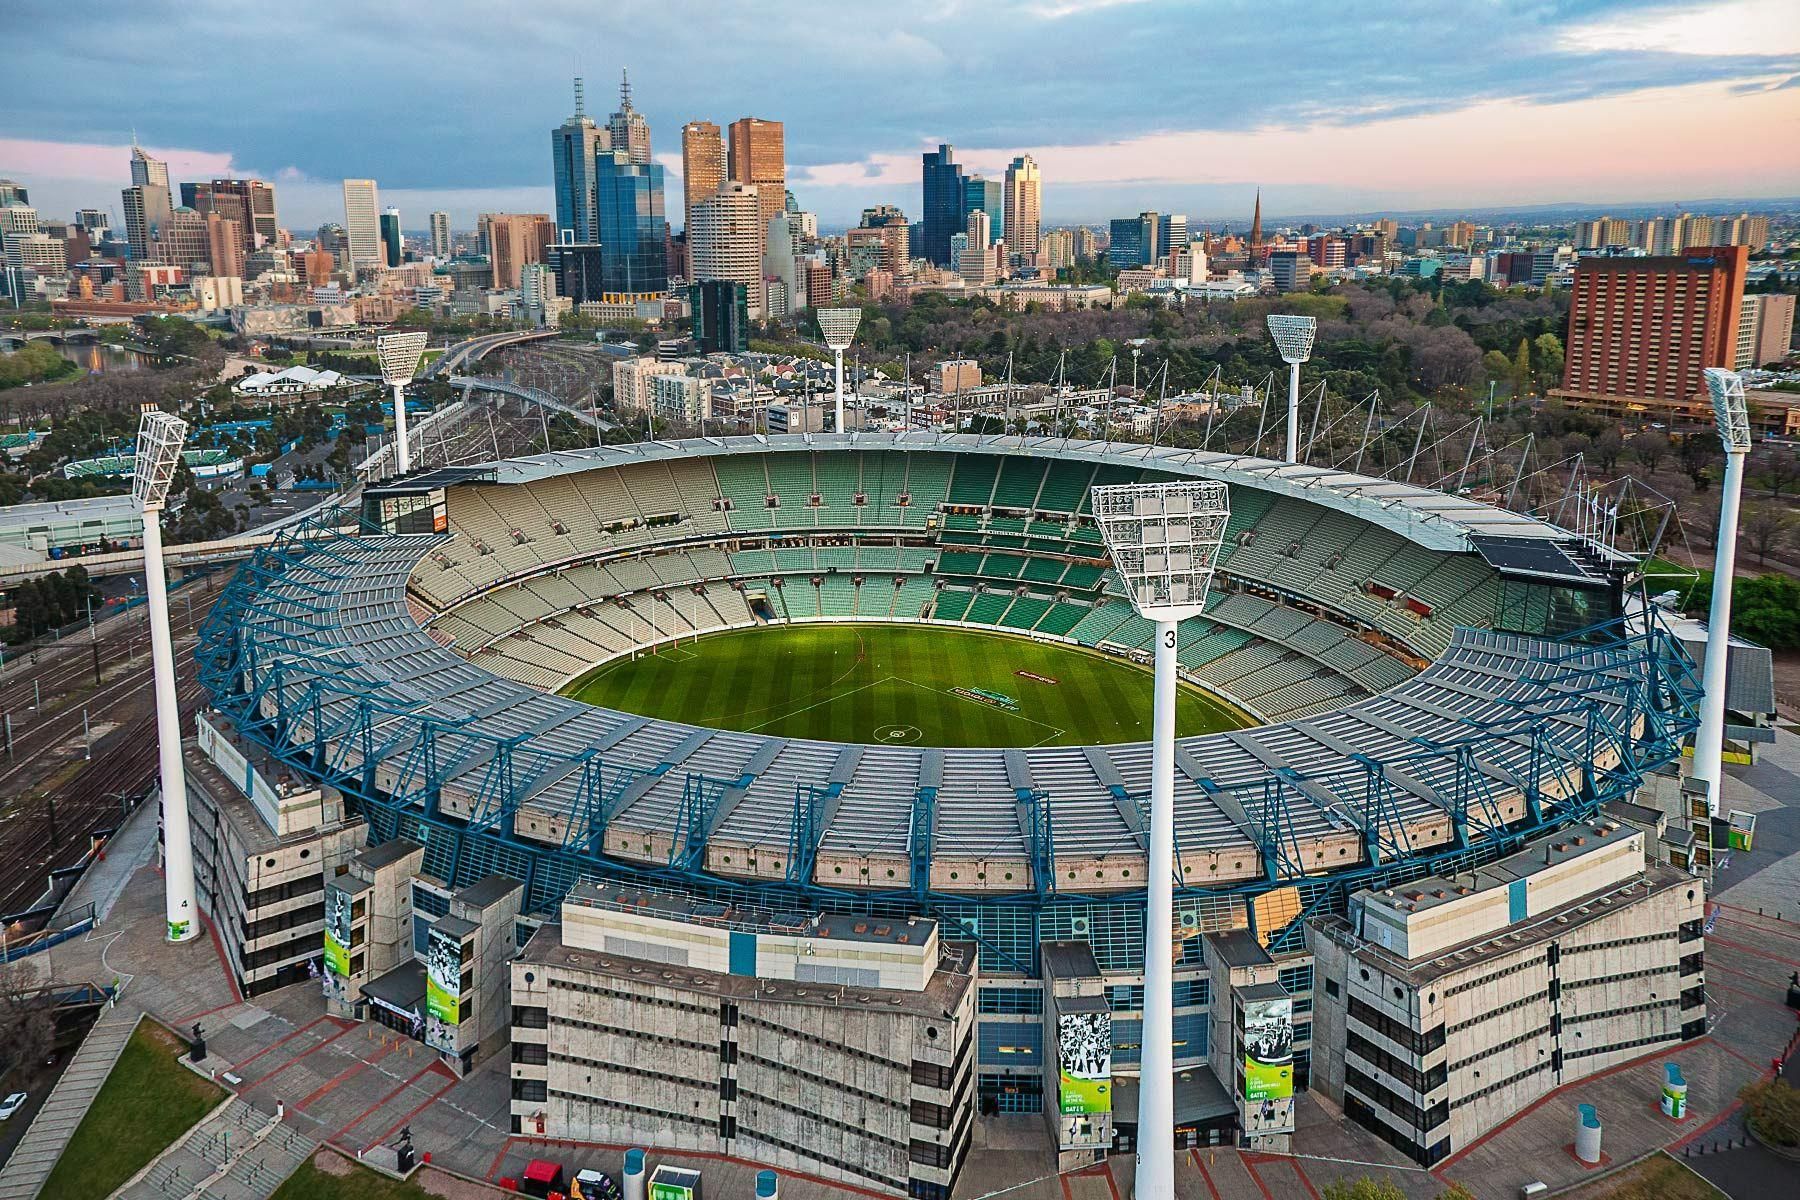 Крикет граунд. Мельбурн стадион крикет. Мельбурн стадион футбольный. Мельбурн крикет Граунд Мельбурн. Мельбурн Австралия стадион.